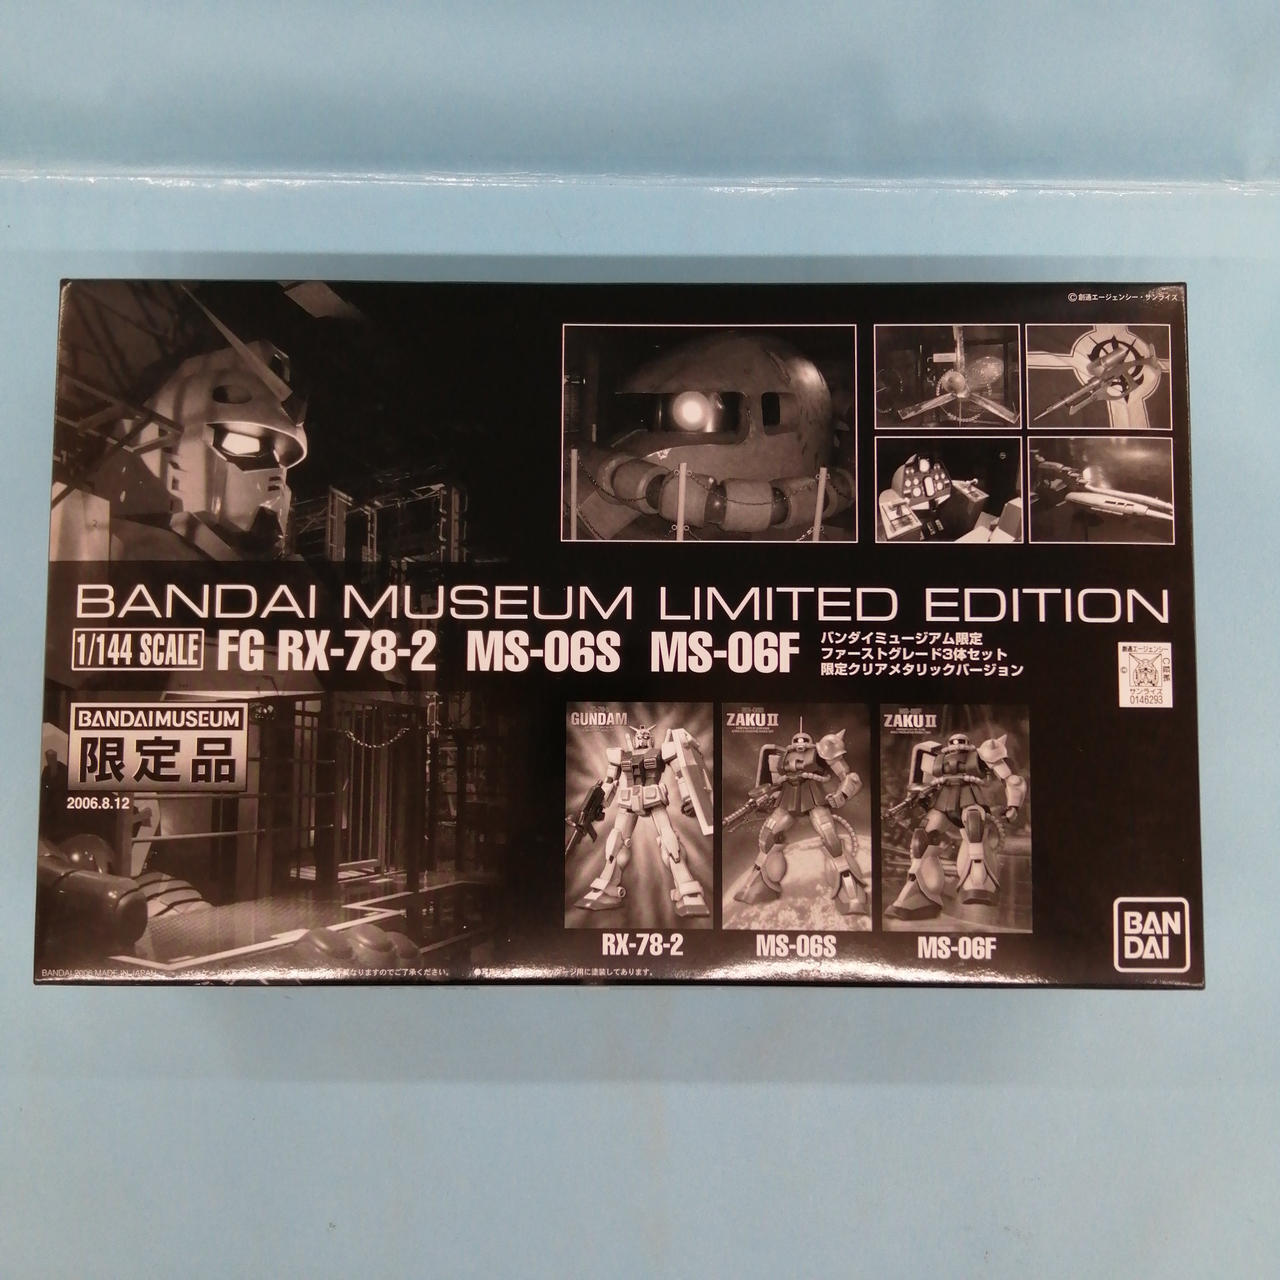 Bandai Bandaimuseum Limited Edition